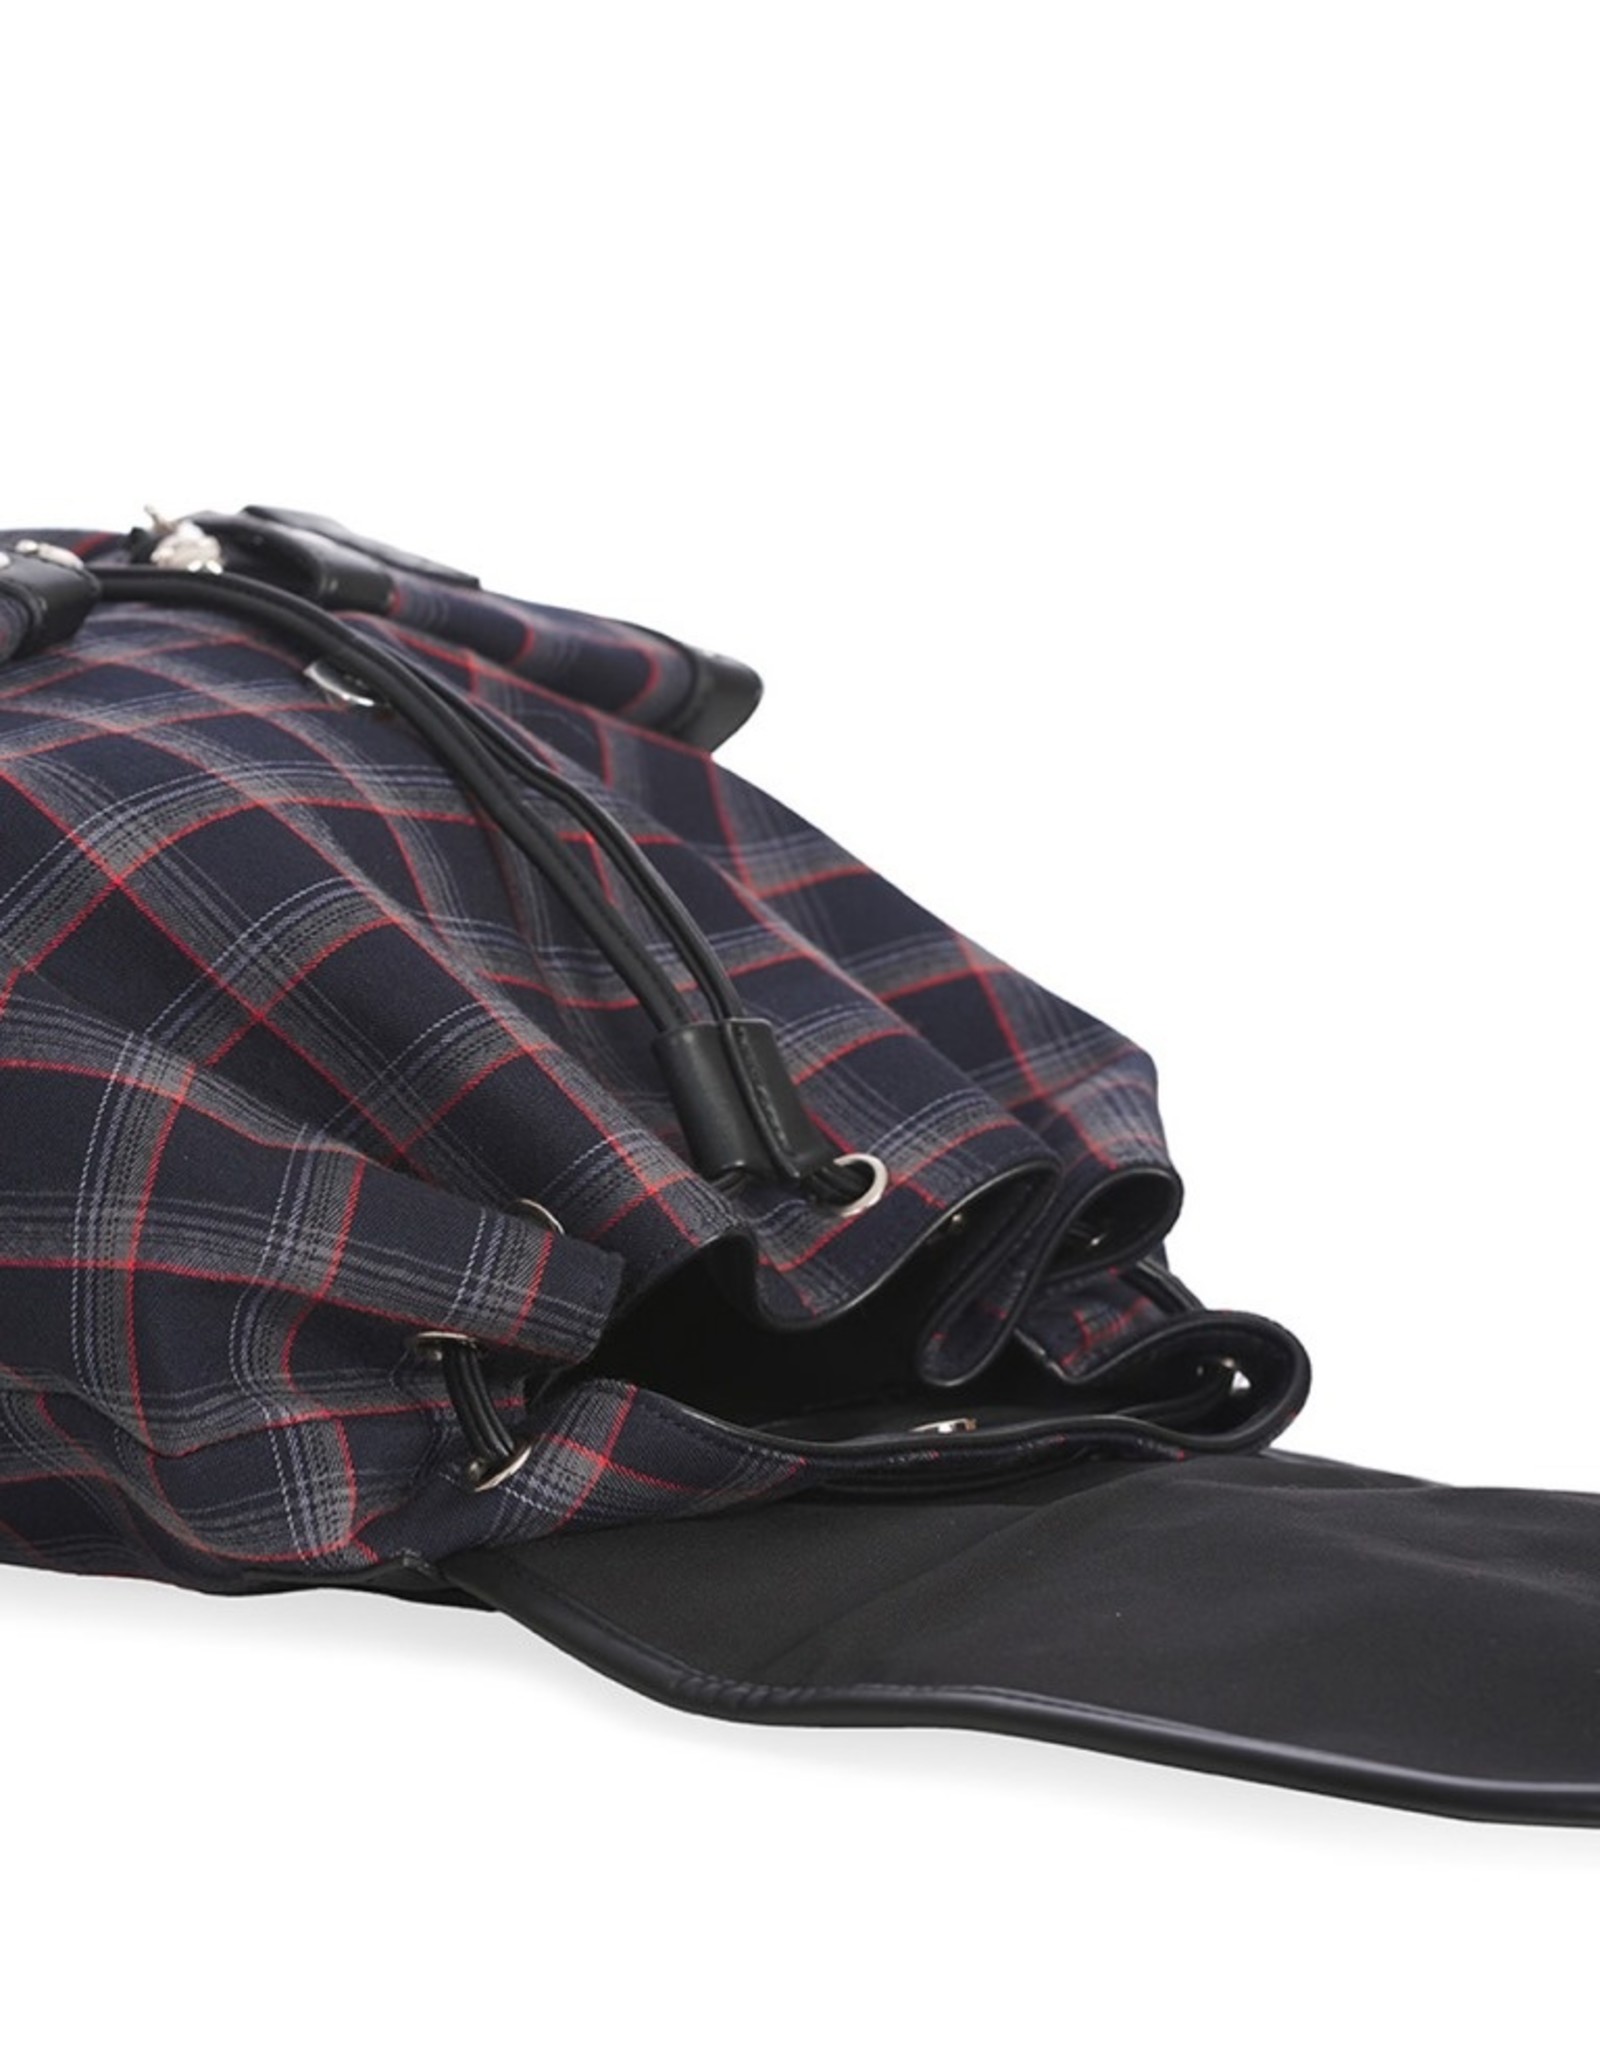 Banned Backpacks - Banned Backpack Tartan Yamy - MLT